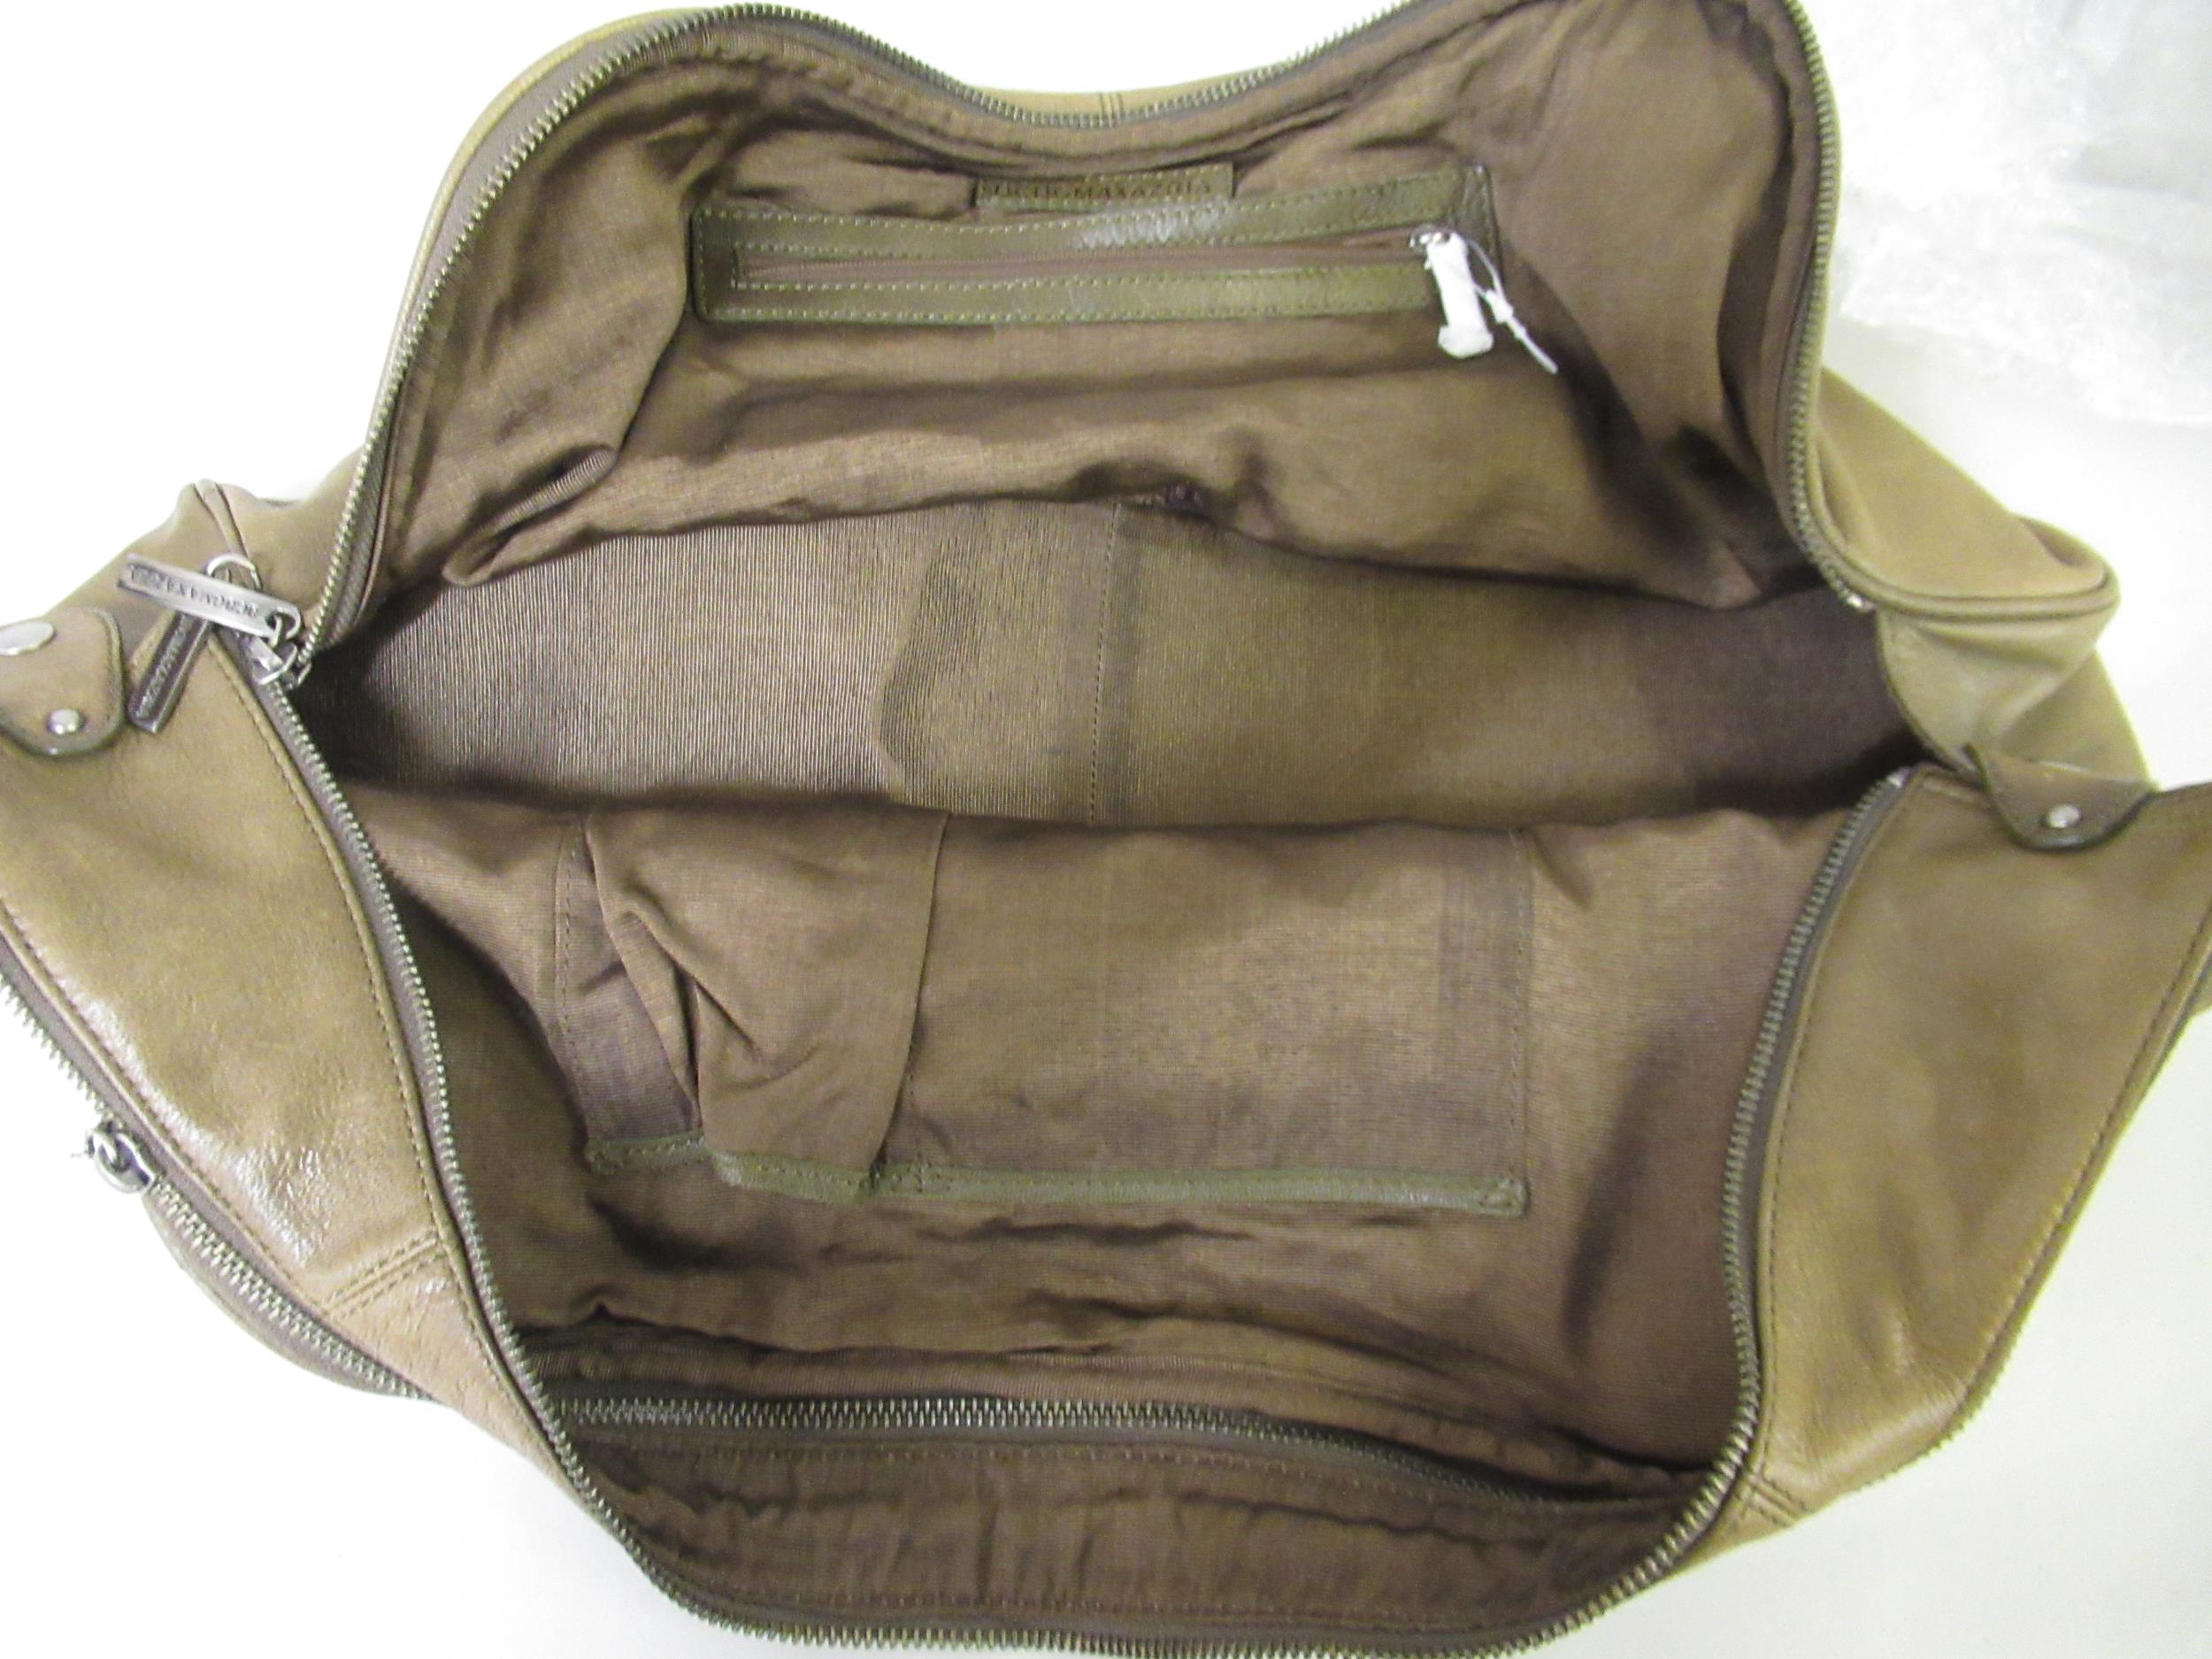 BCBG Max Azria, large green leather shoulder bag One zip tag missing - Image 8 of 9